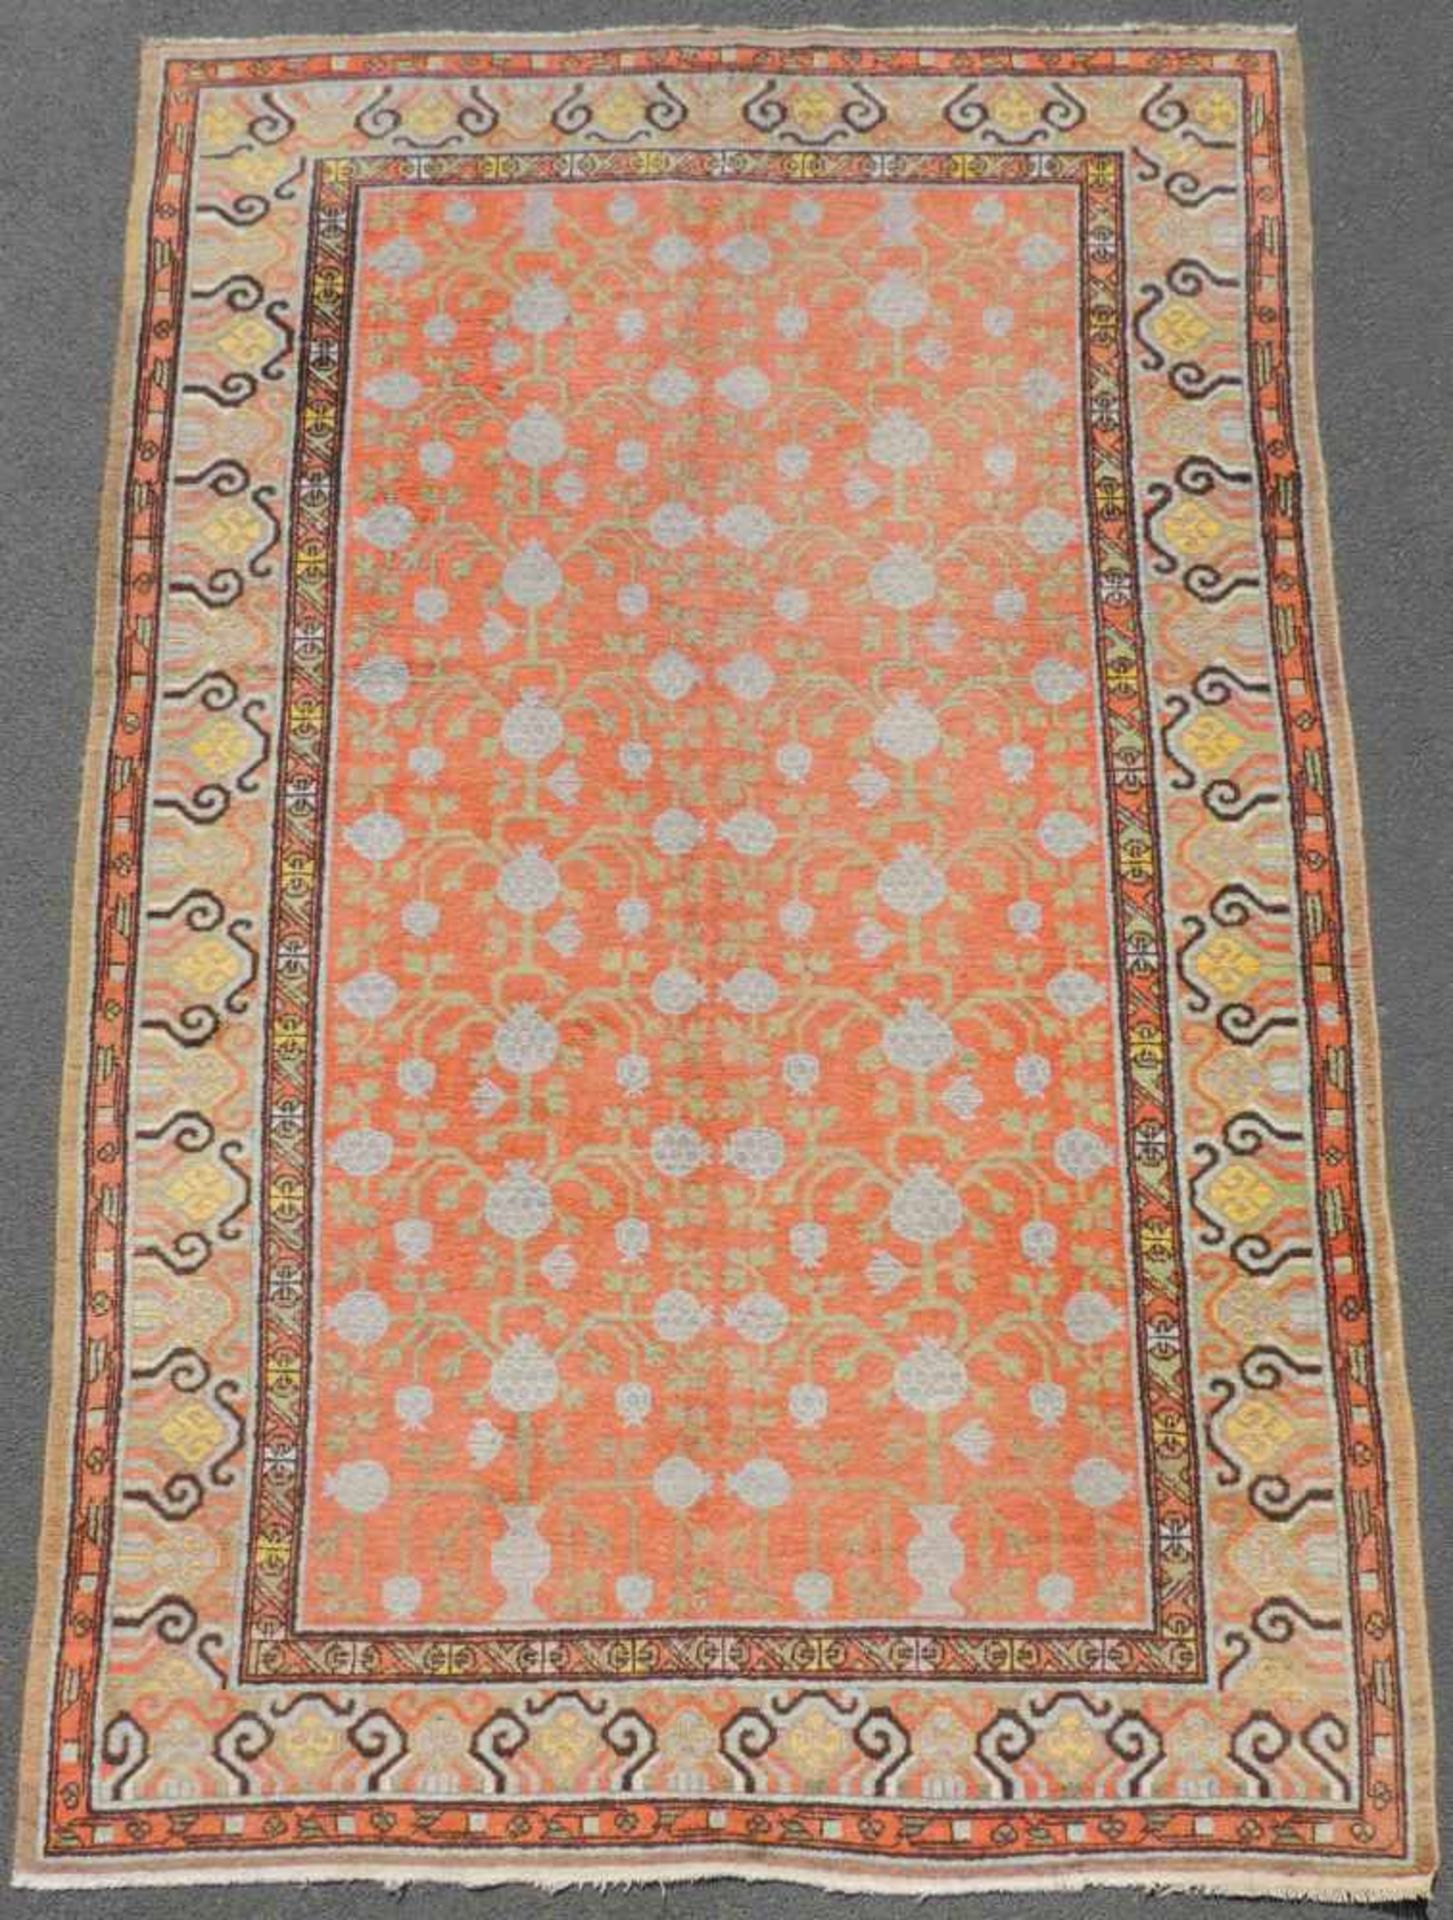 Khotan. Teppich. Zentralasien. Ost - China. Antik, um 1920. 284 cm x 174 cm. Orientteppich.